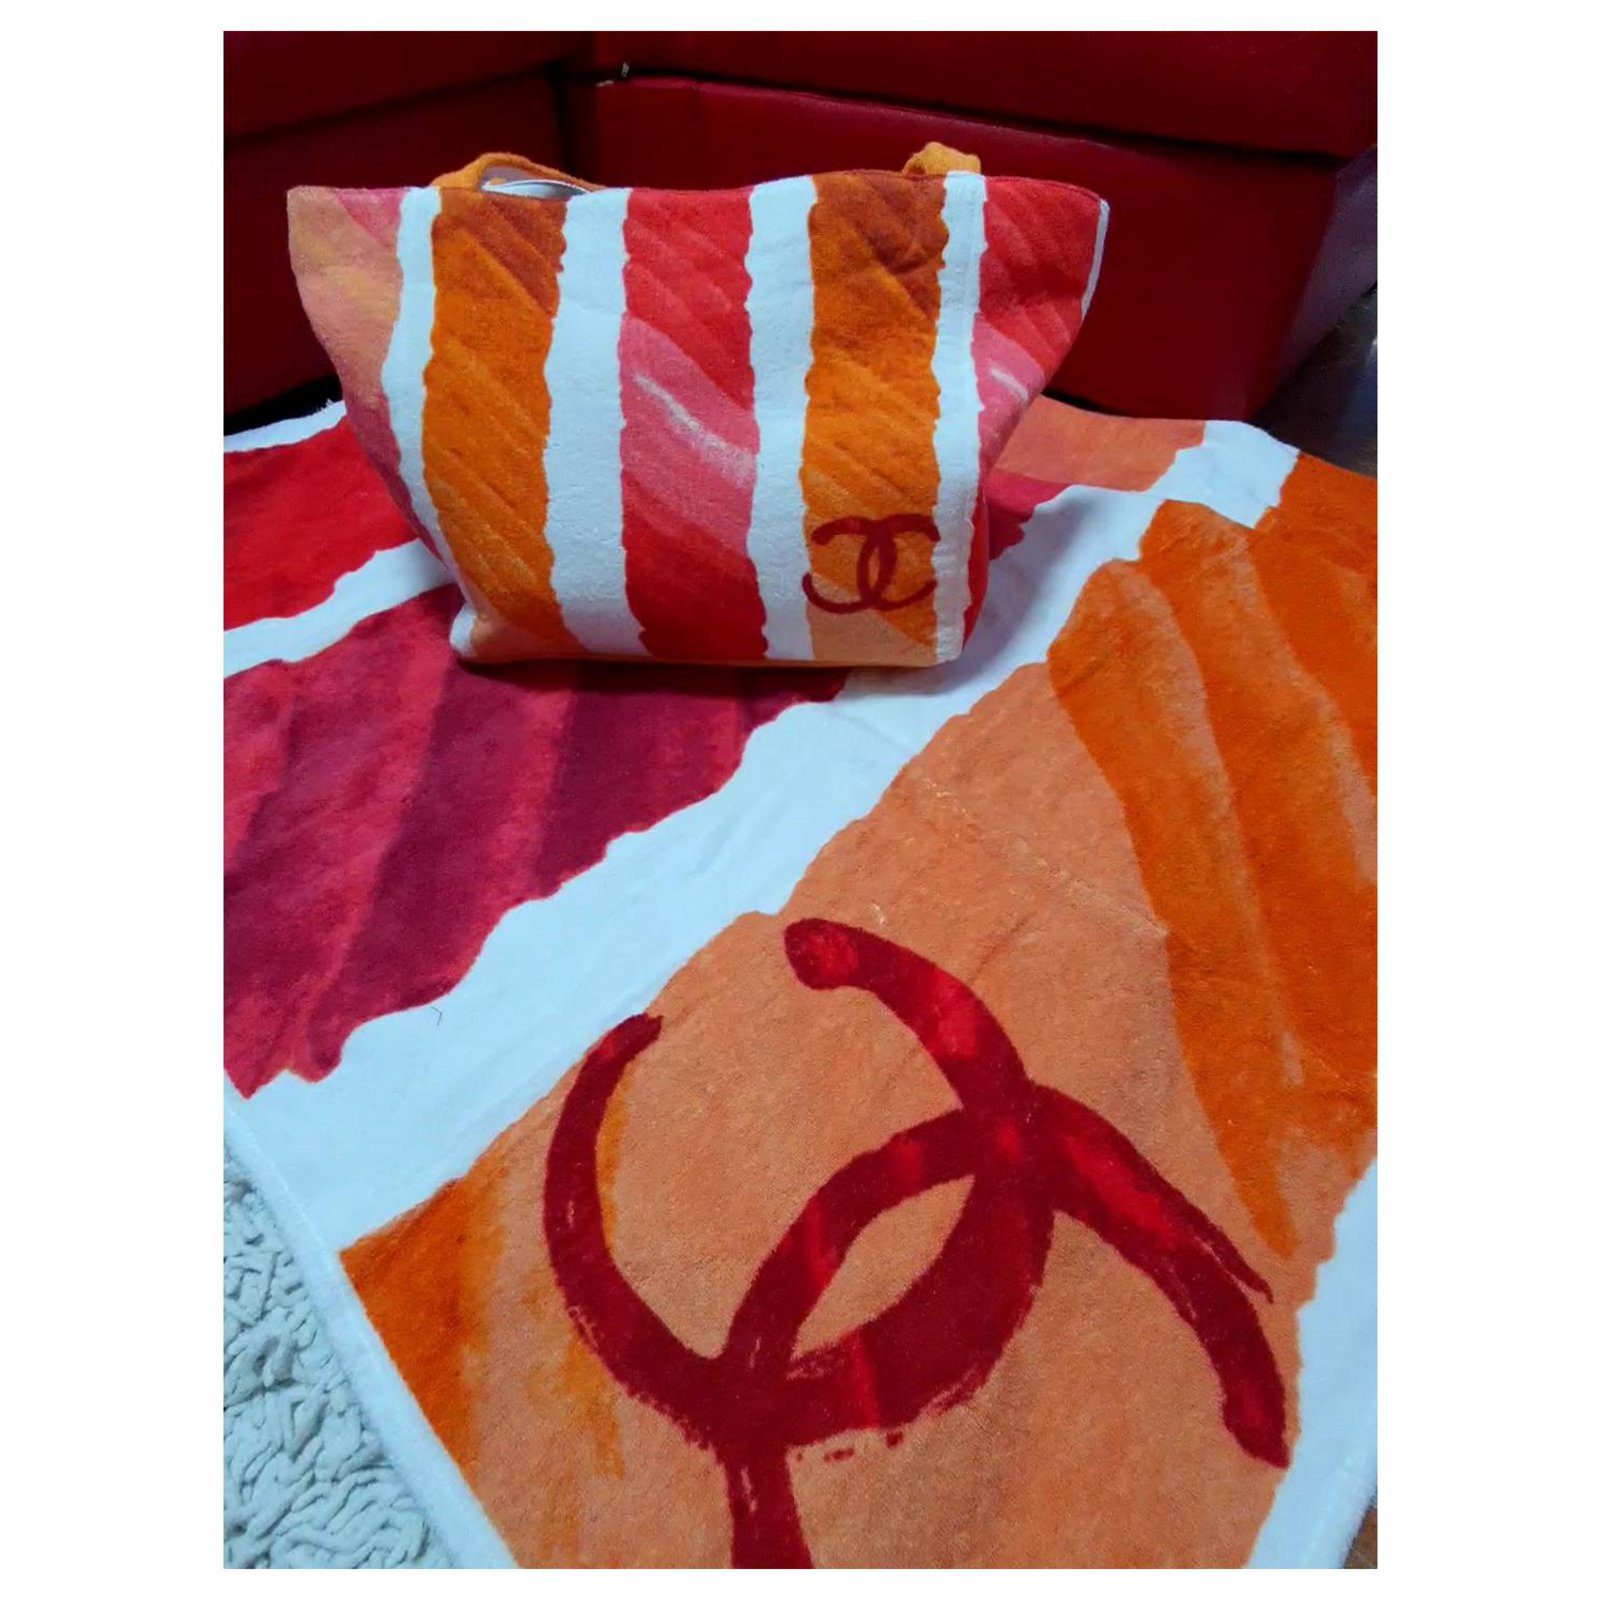 New Chanel beach bag + towel Pink White Multiple colors Orange